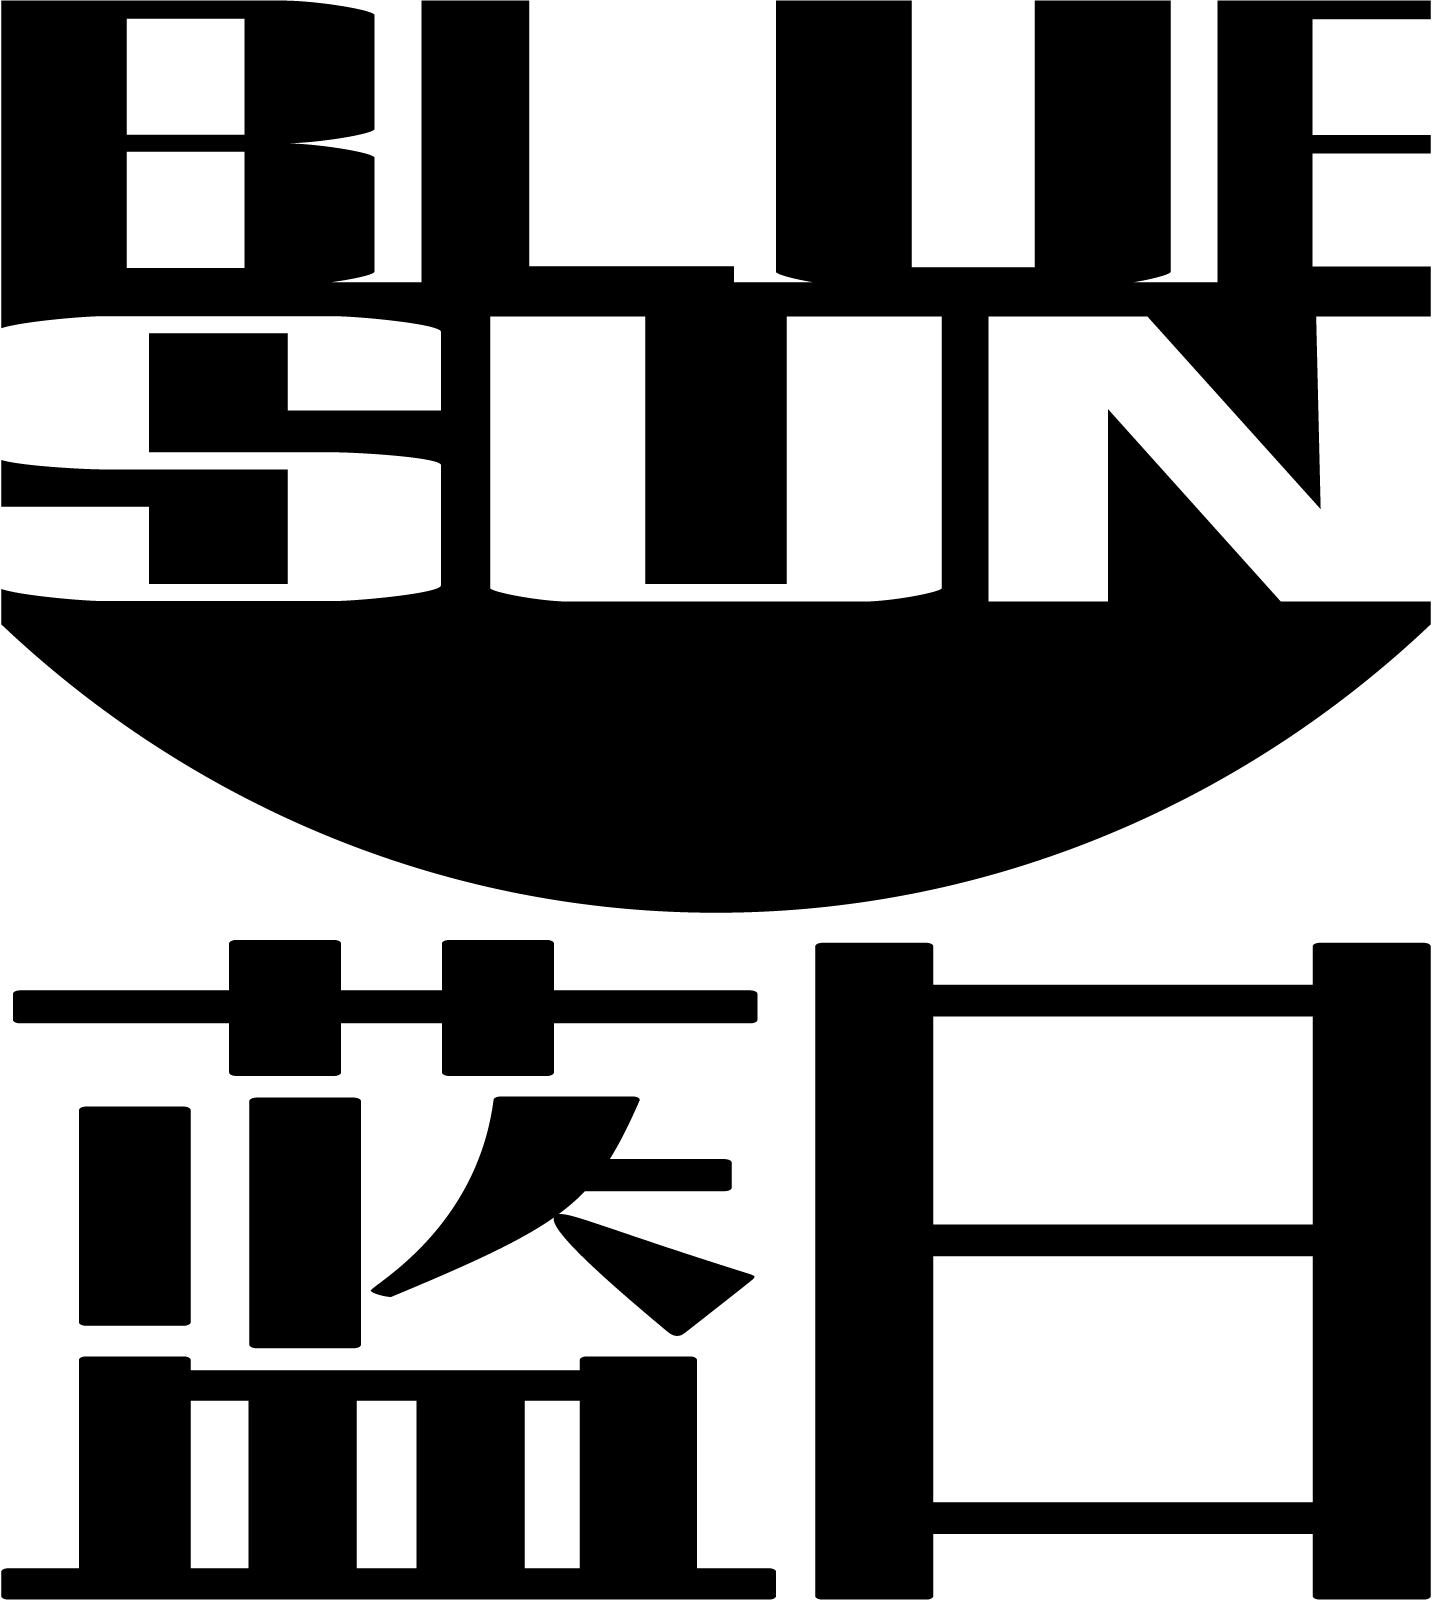 Blue Sun Logo - Image result for blue sun logo. Cricket. Firefly serenity